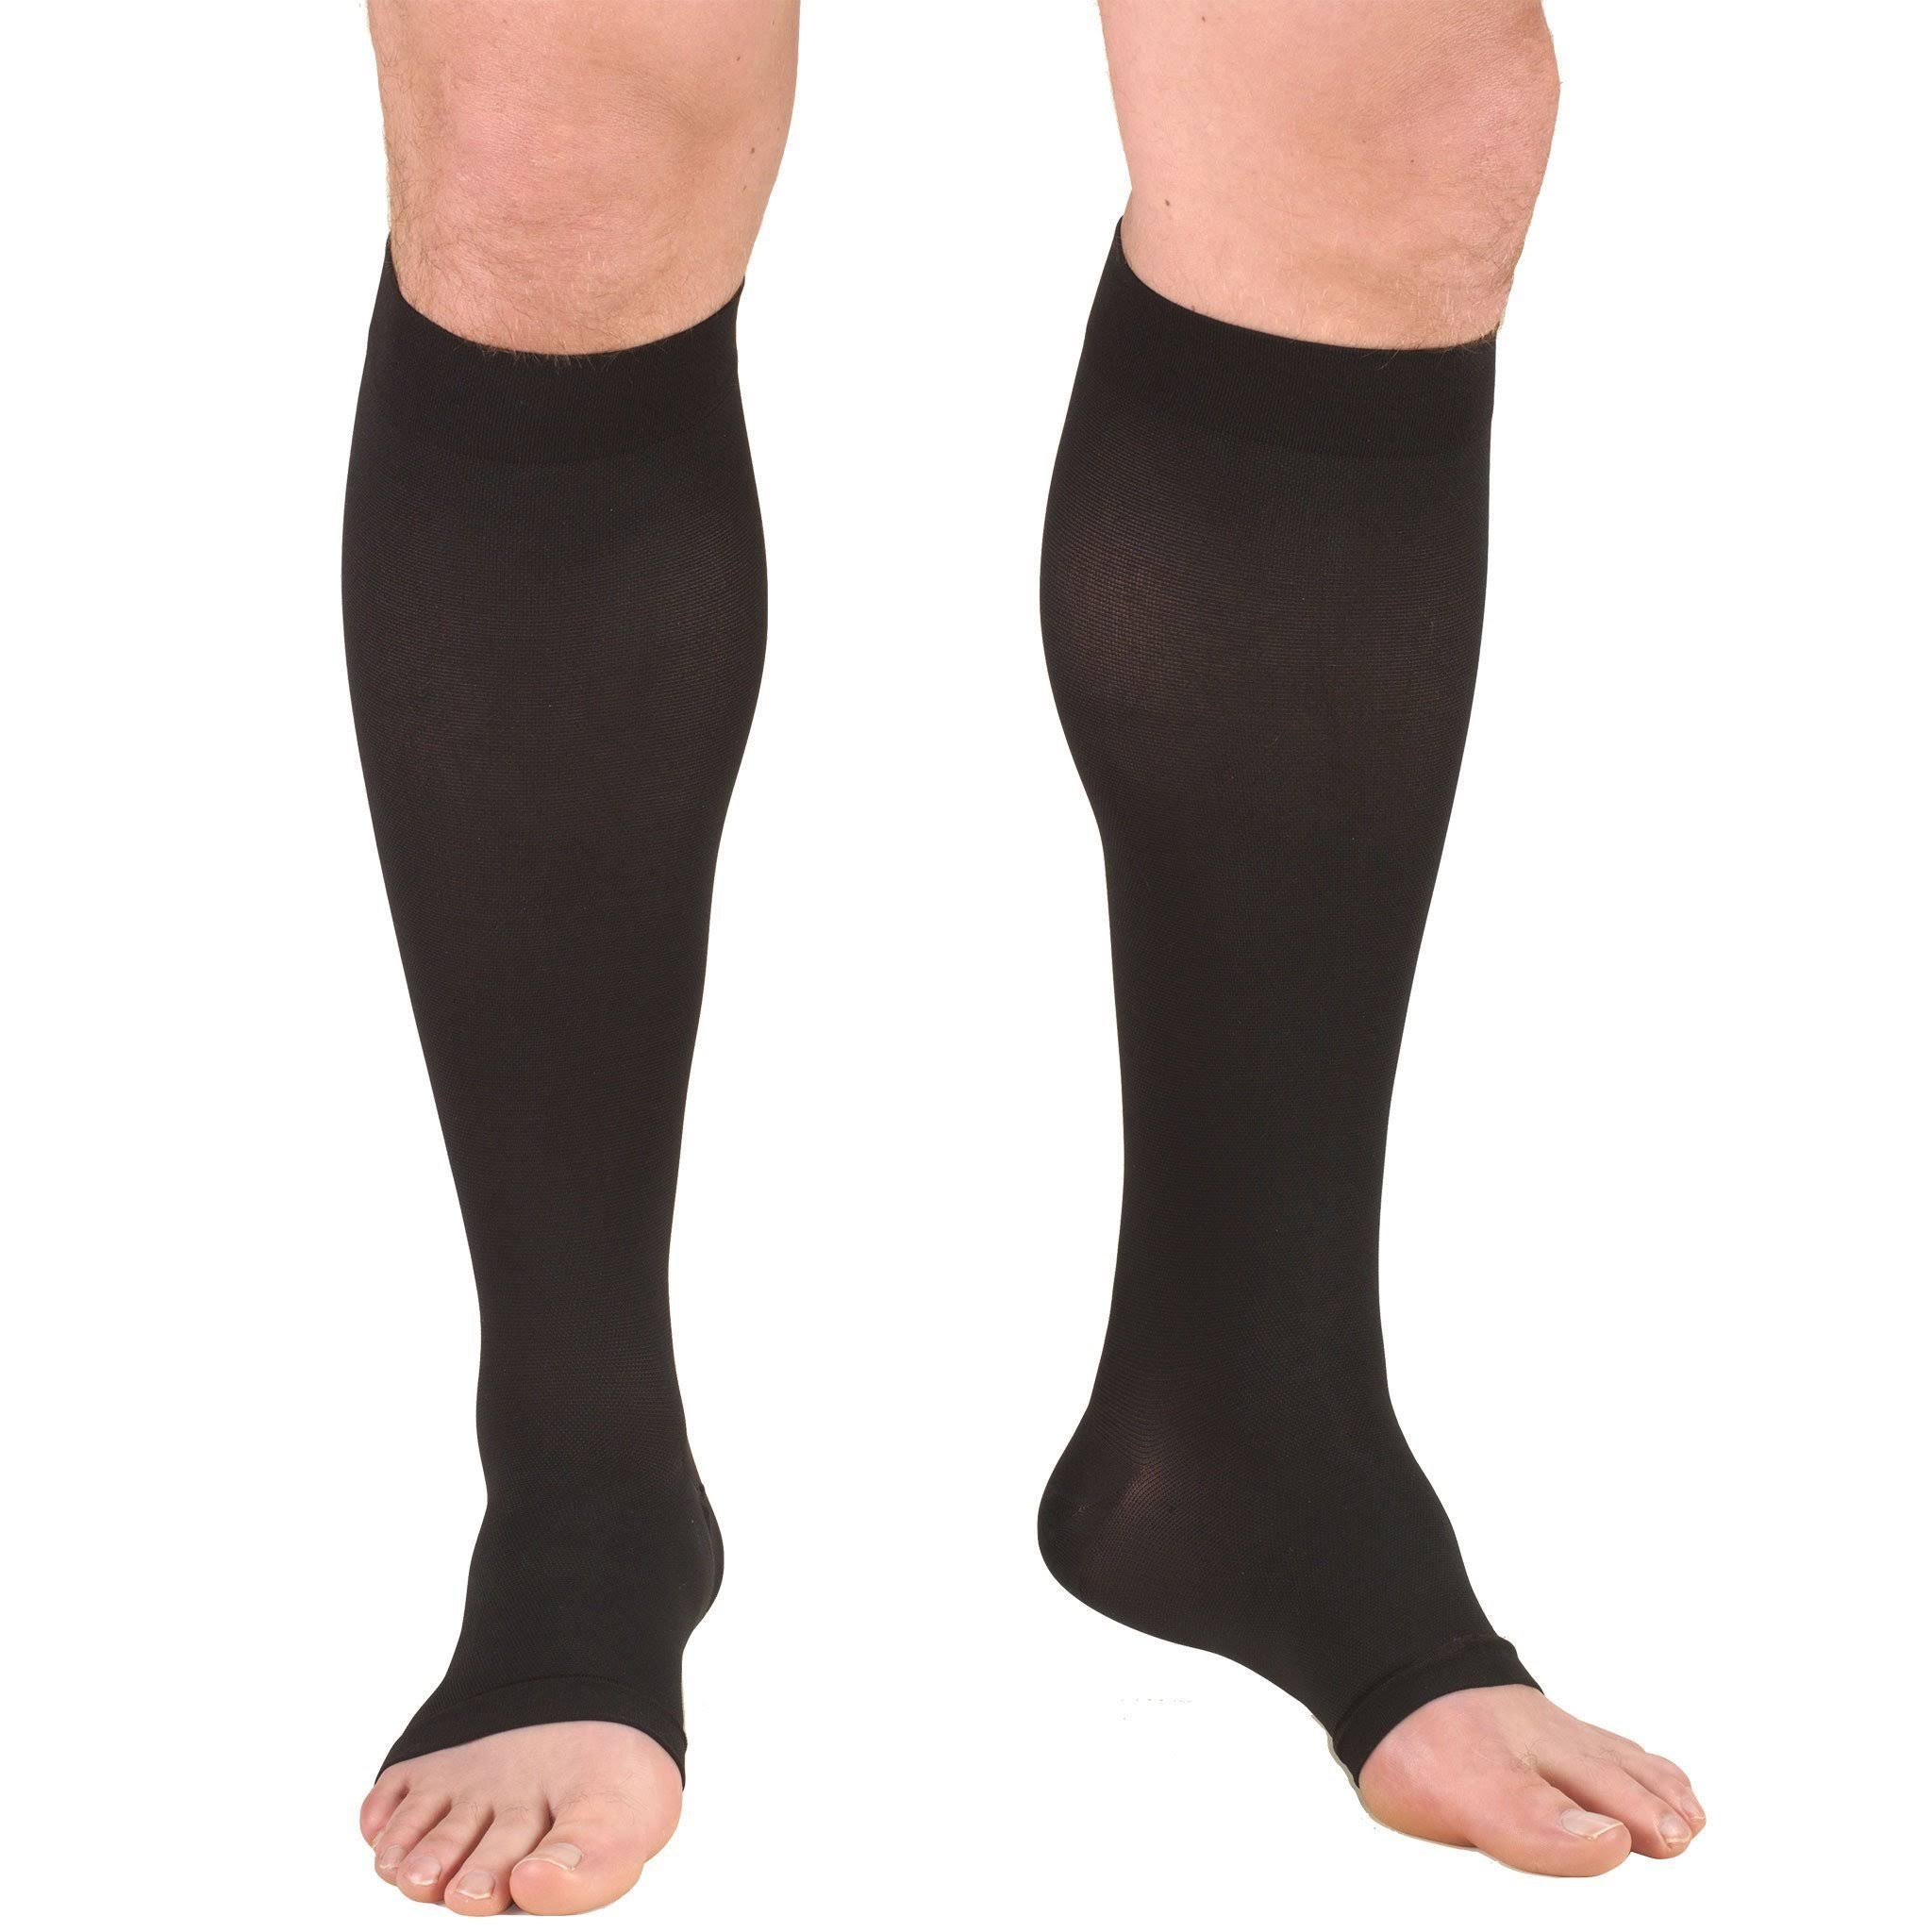 Truform Stockings - Black, Small, Knee High, Open Toe, 15-20 mmHg